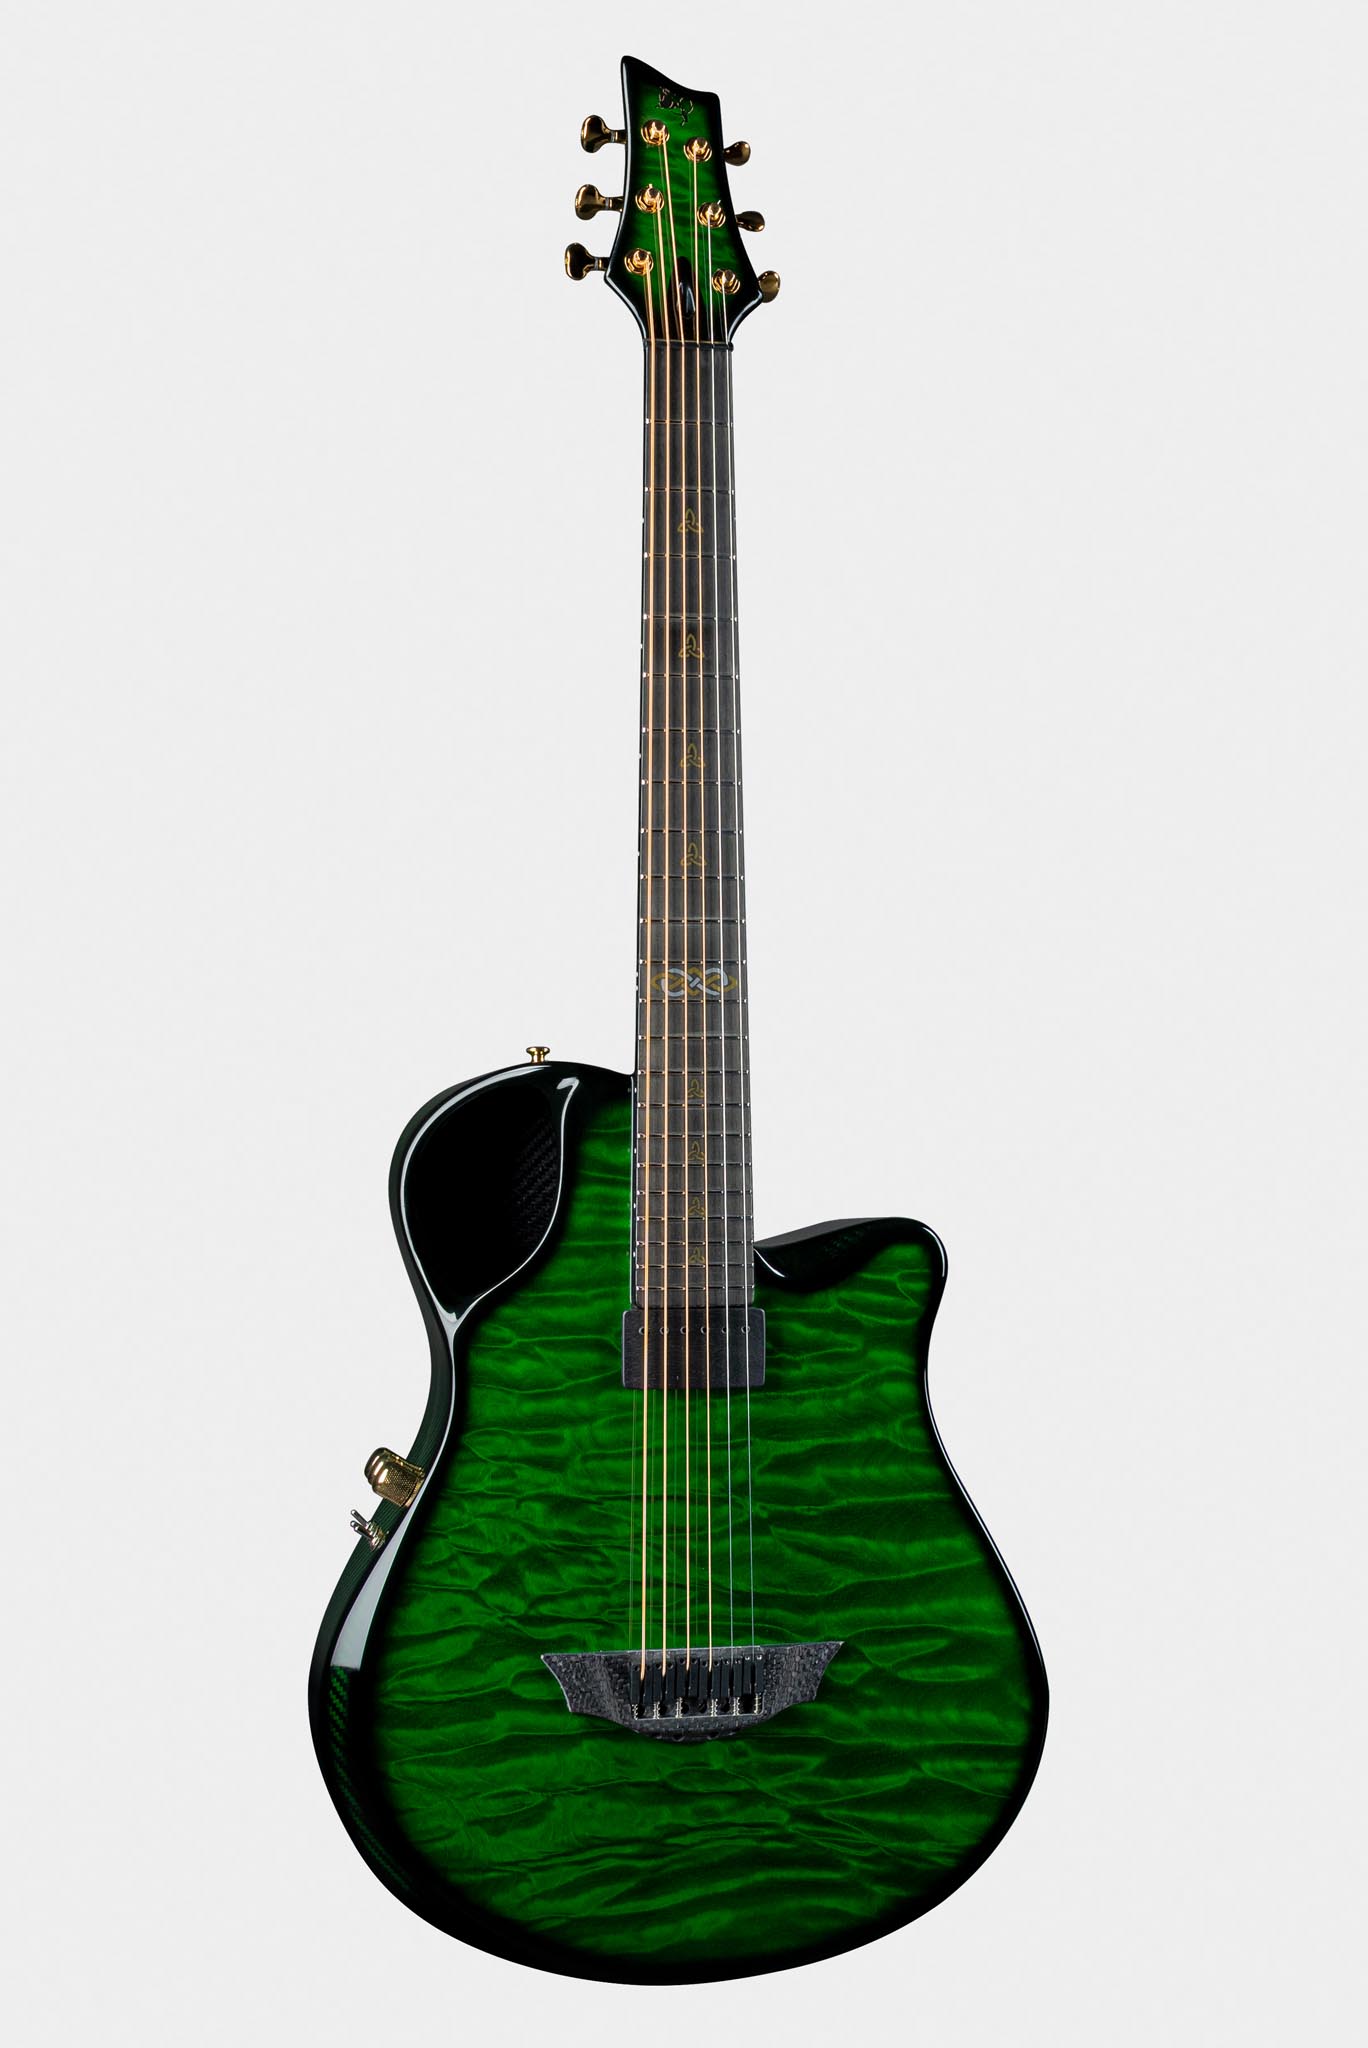 Emerald Guitars X10 model in striking green finish with sleek black contours